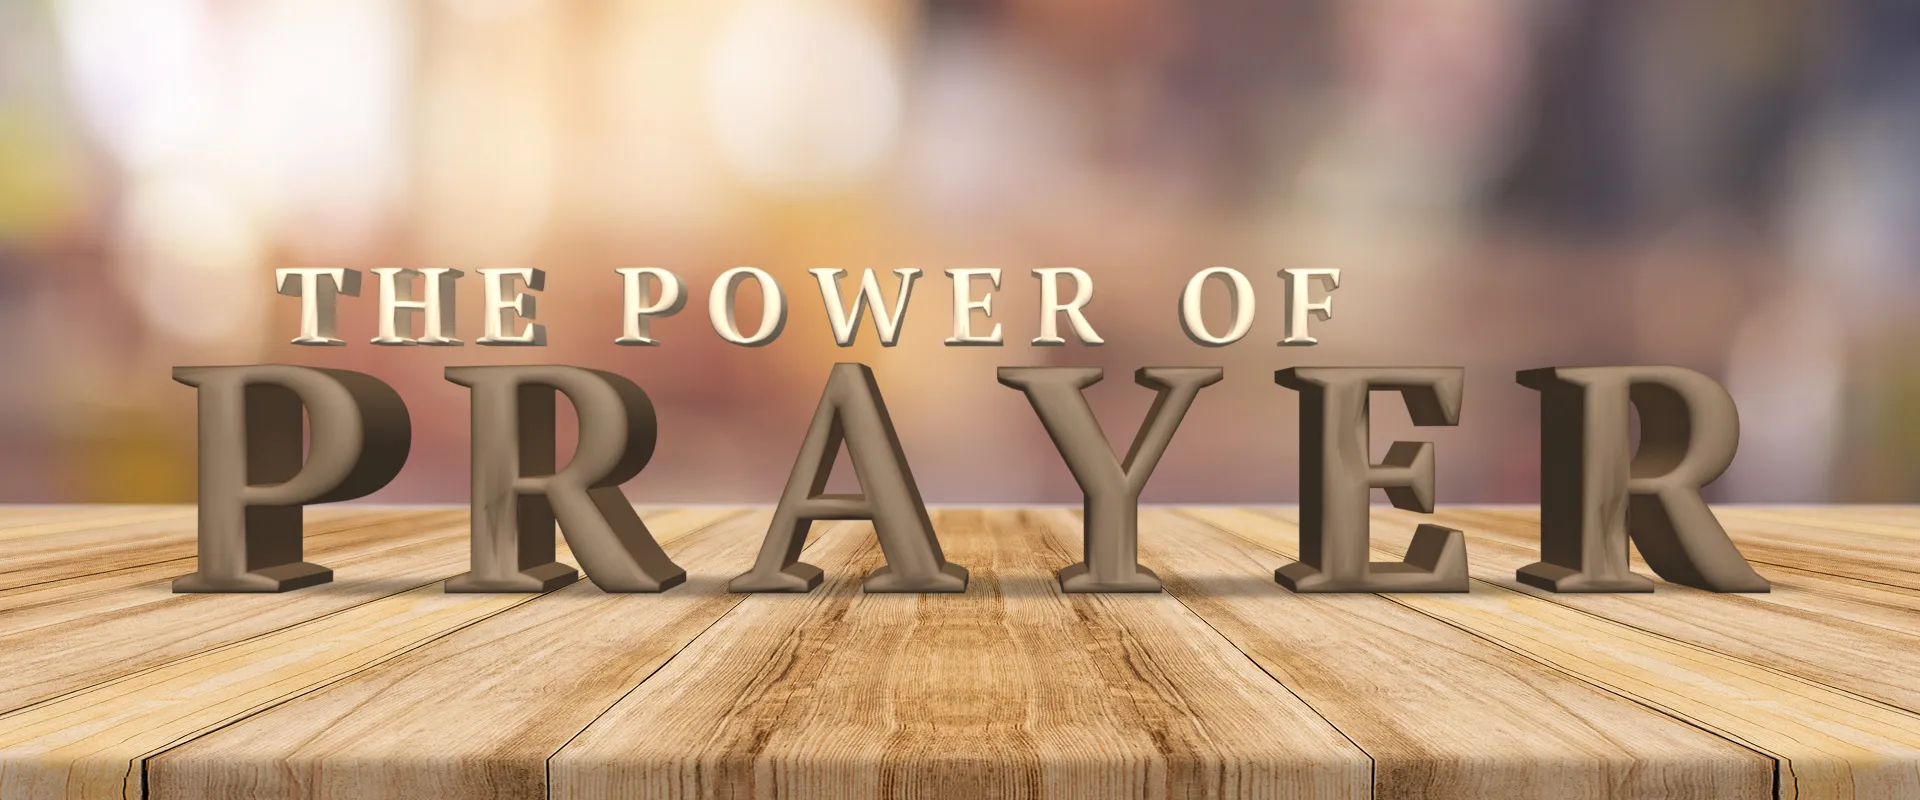 prayer of power